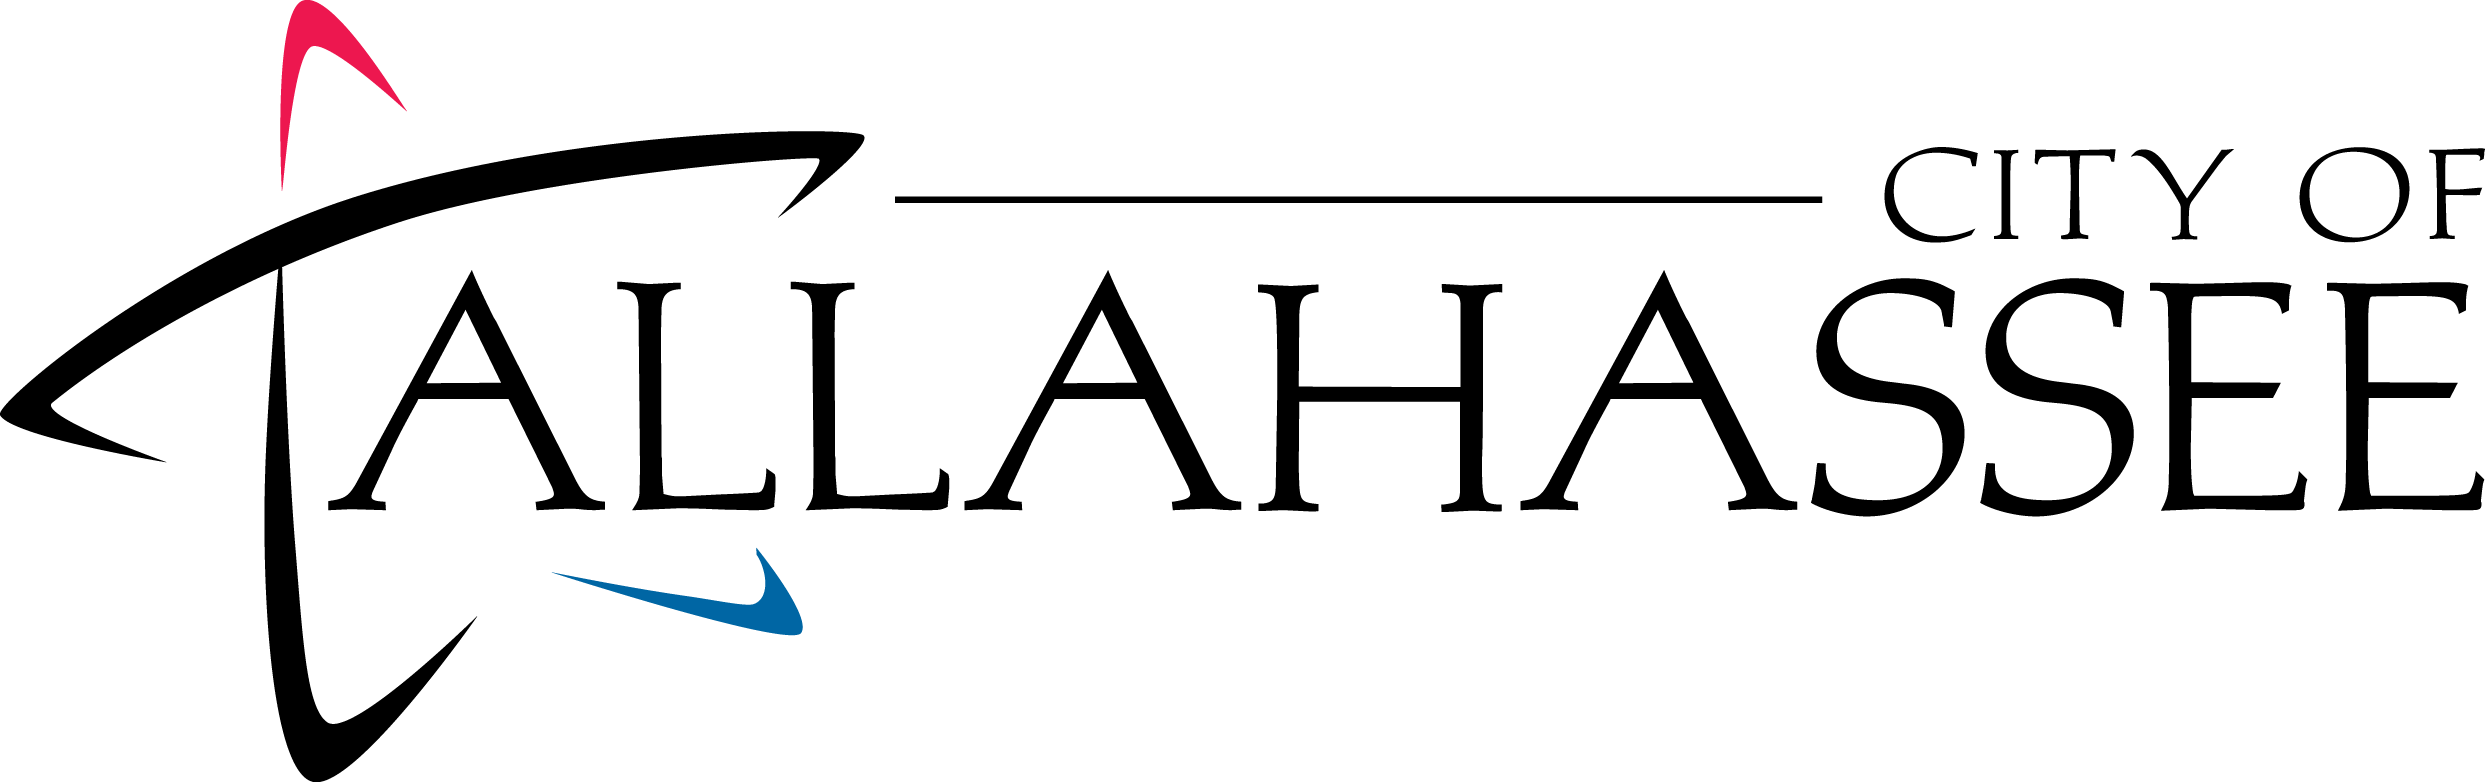 Logo - City Of Tallahassee Logo Png (2485x782)